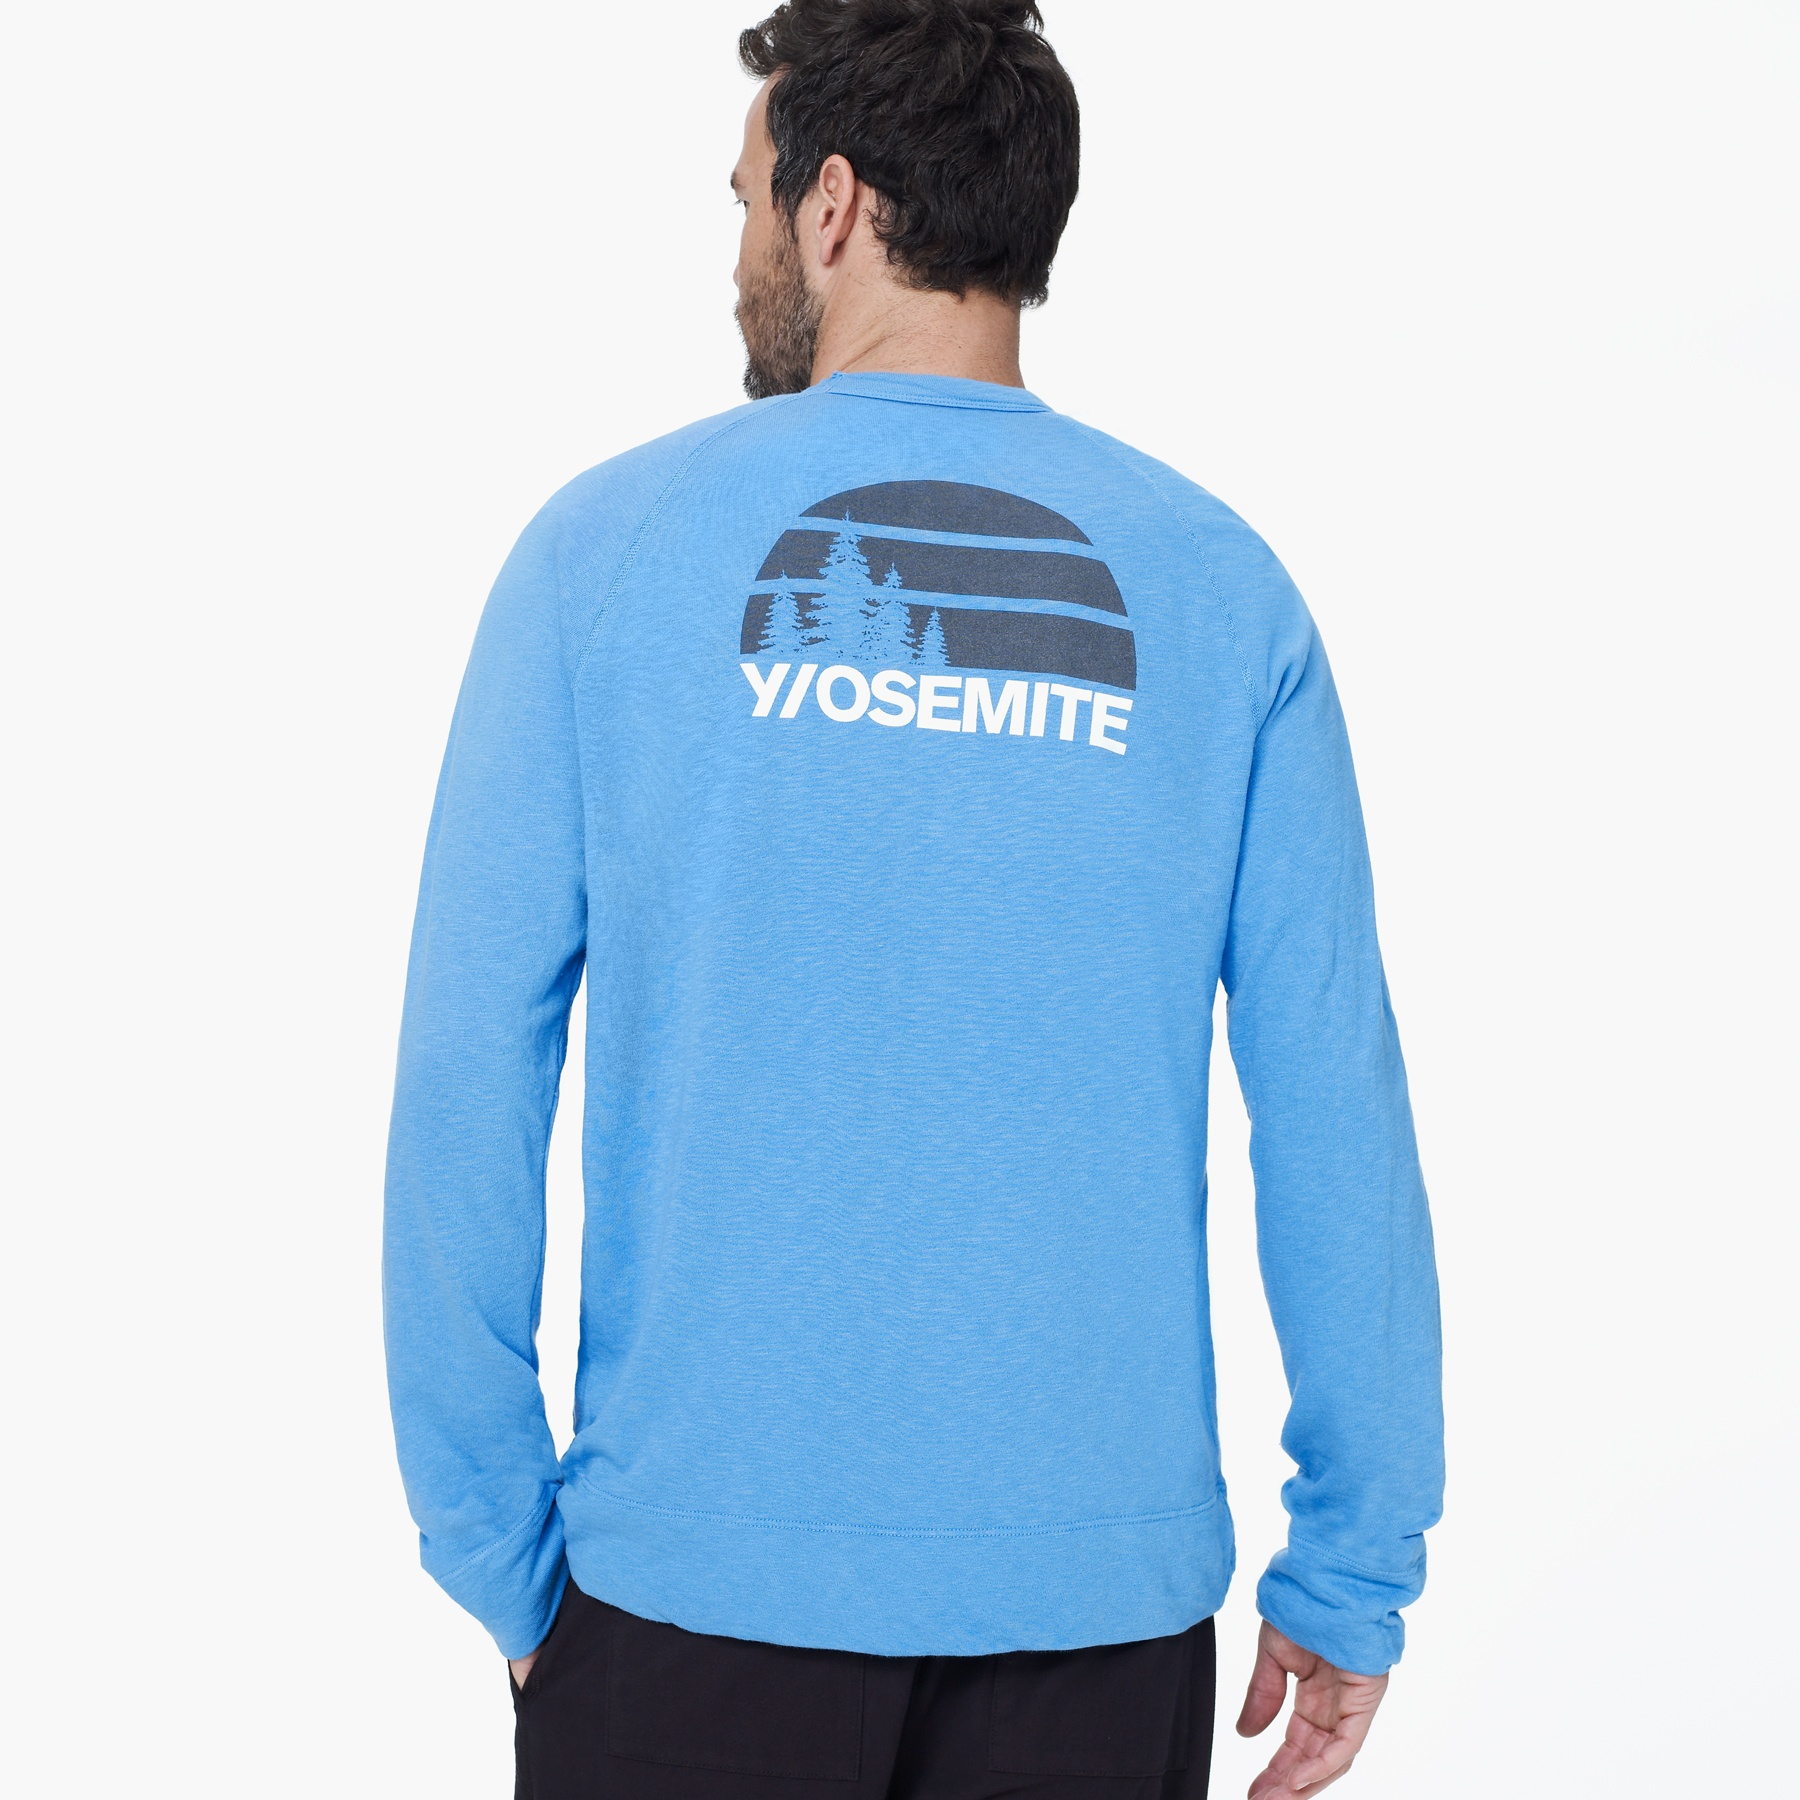 Lyst - James Perse Yosemite Vintage Fleece Sweatshirt in Blue for Men